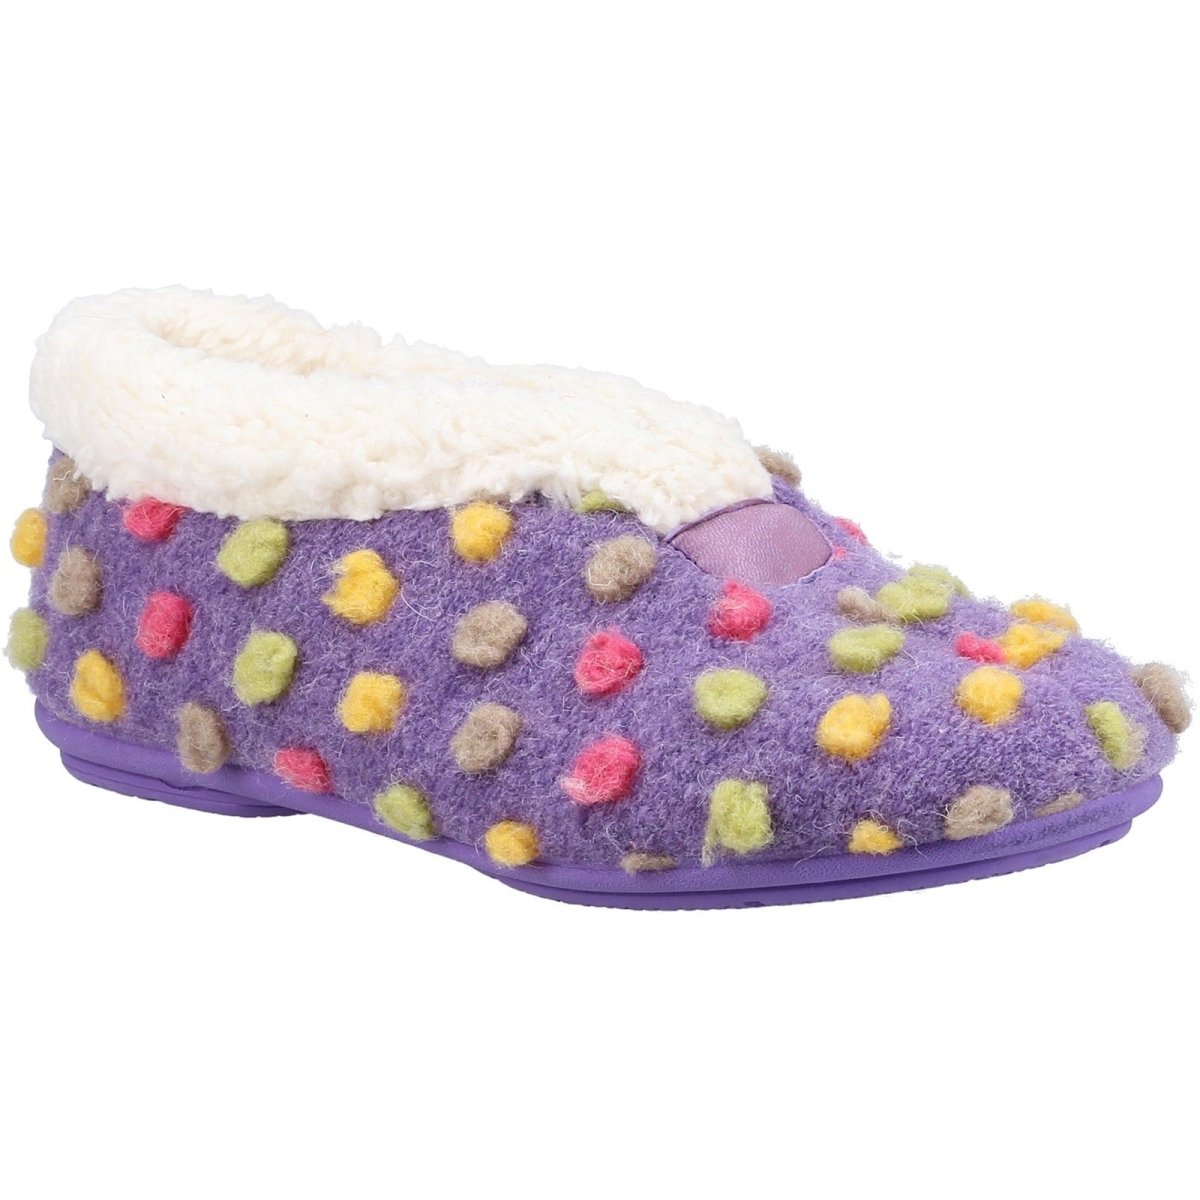 Fleet & Foster Snowberry Polka Dot Ladies Slippers - Shoe Store Direct